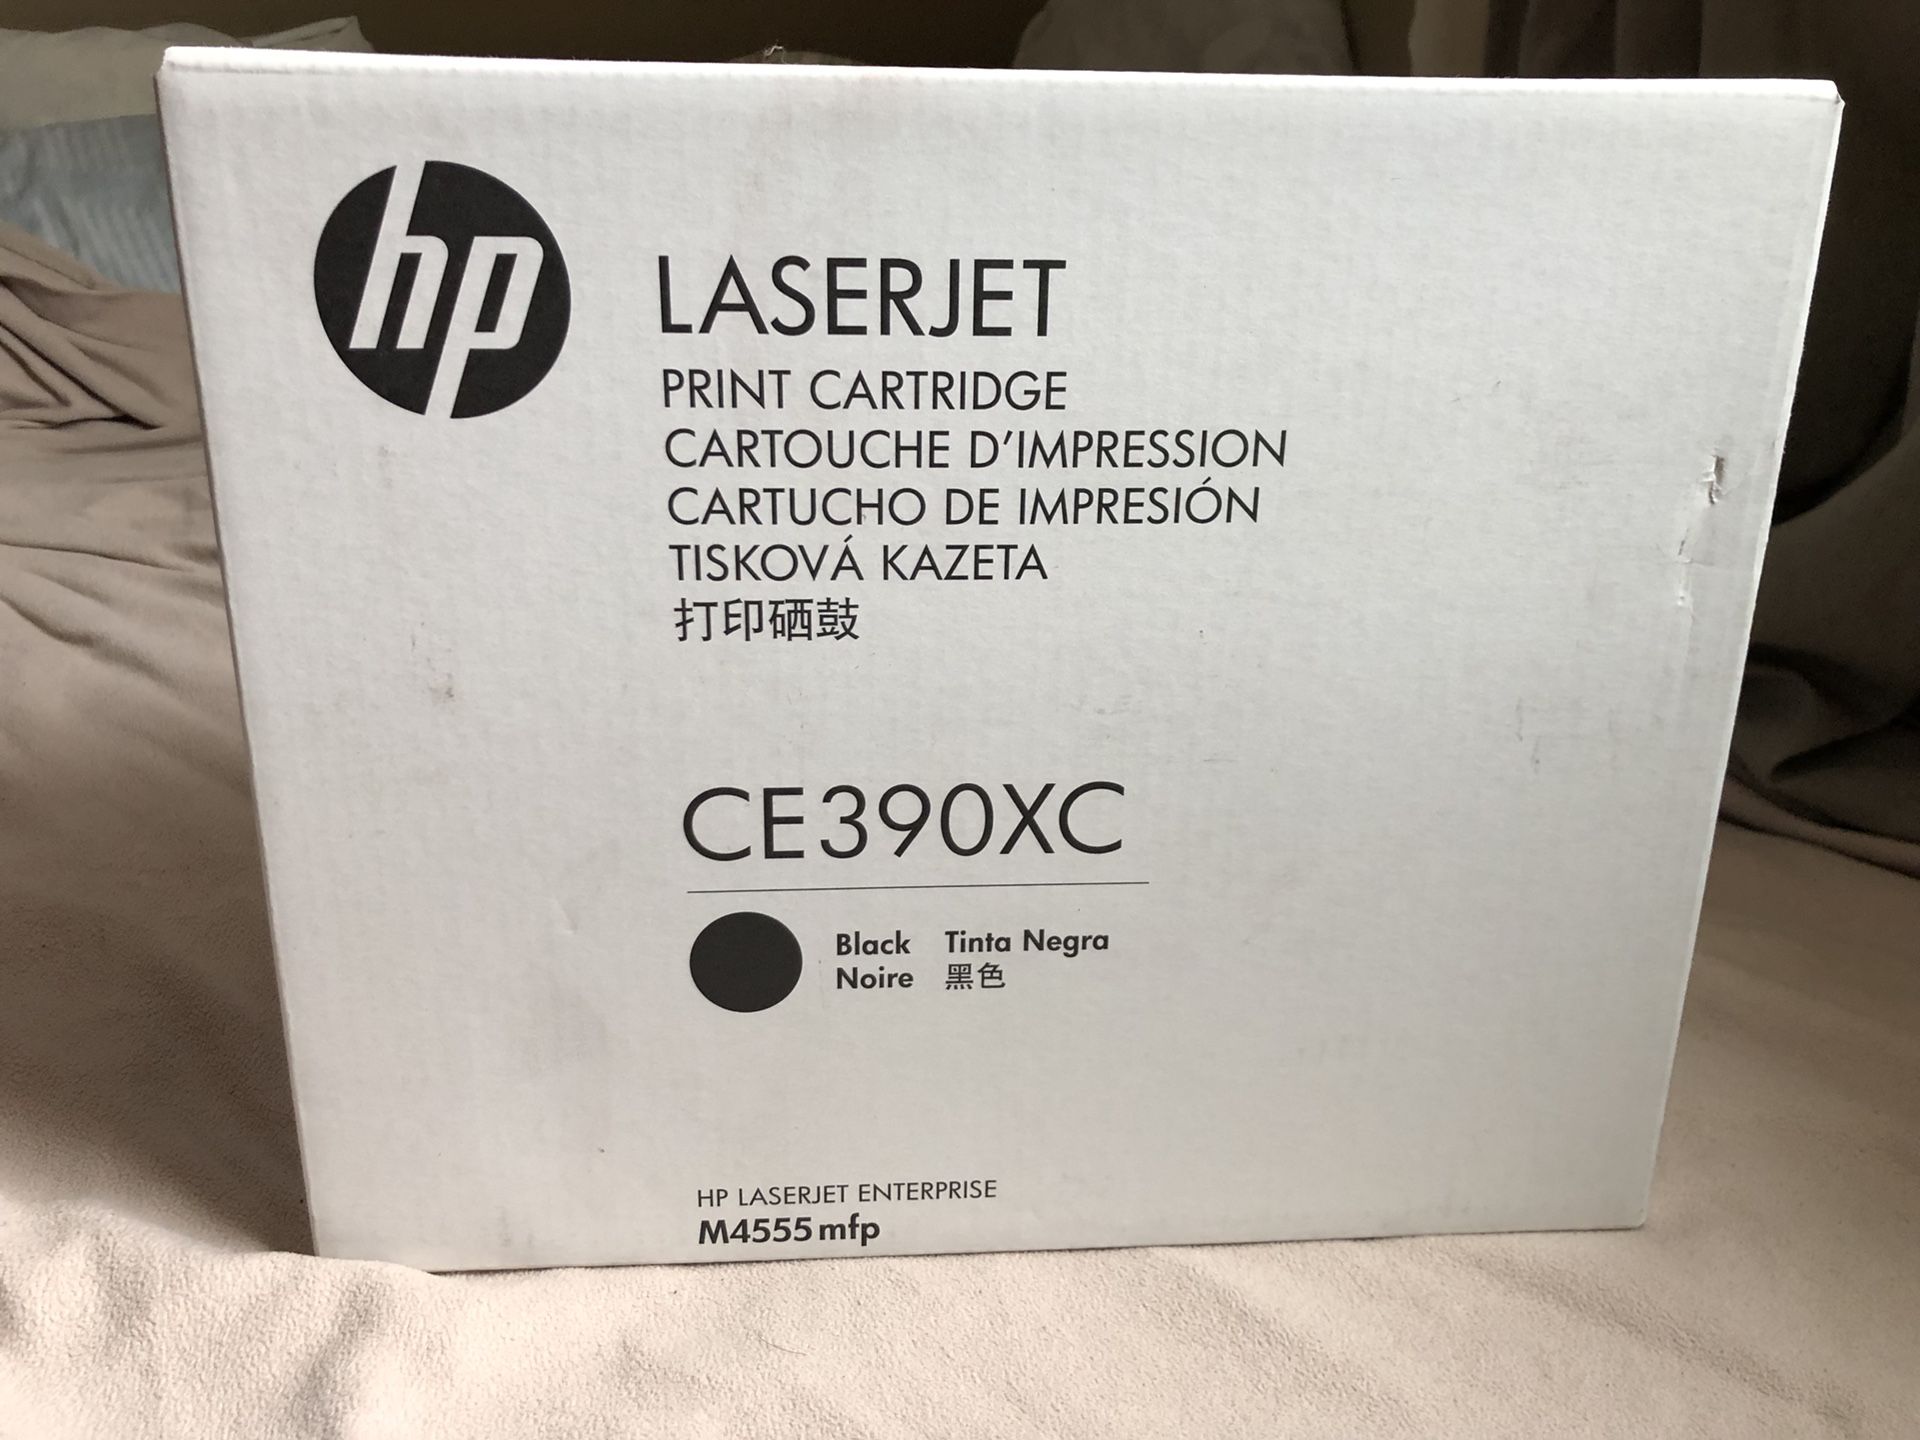 hp LaserJet Printer Toner, CE390XC, Black